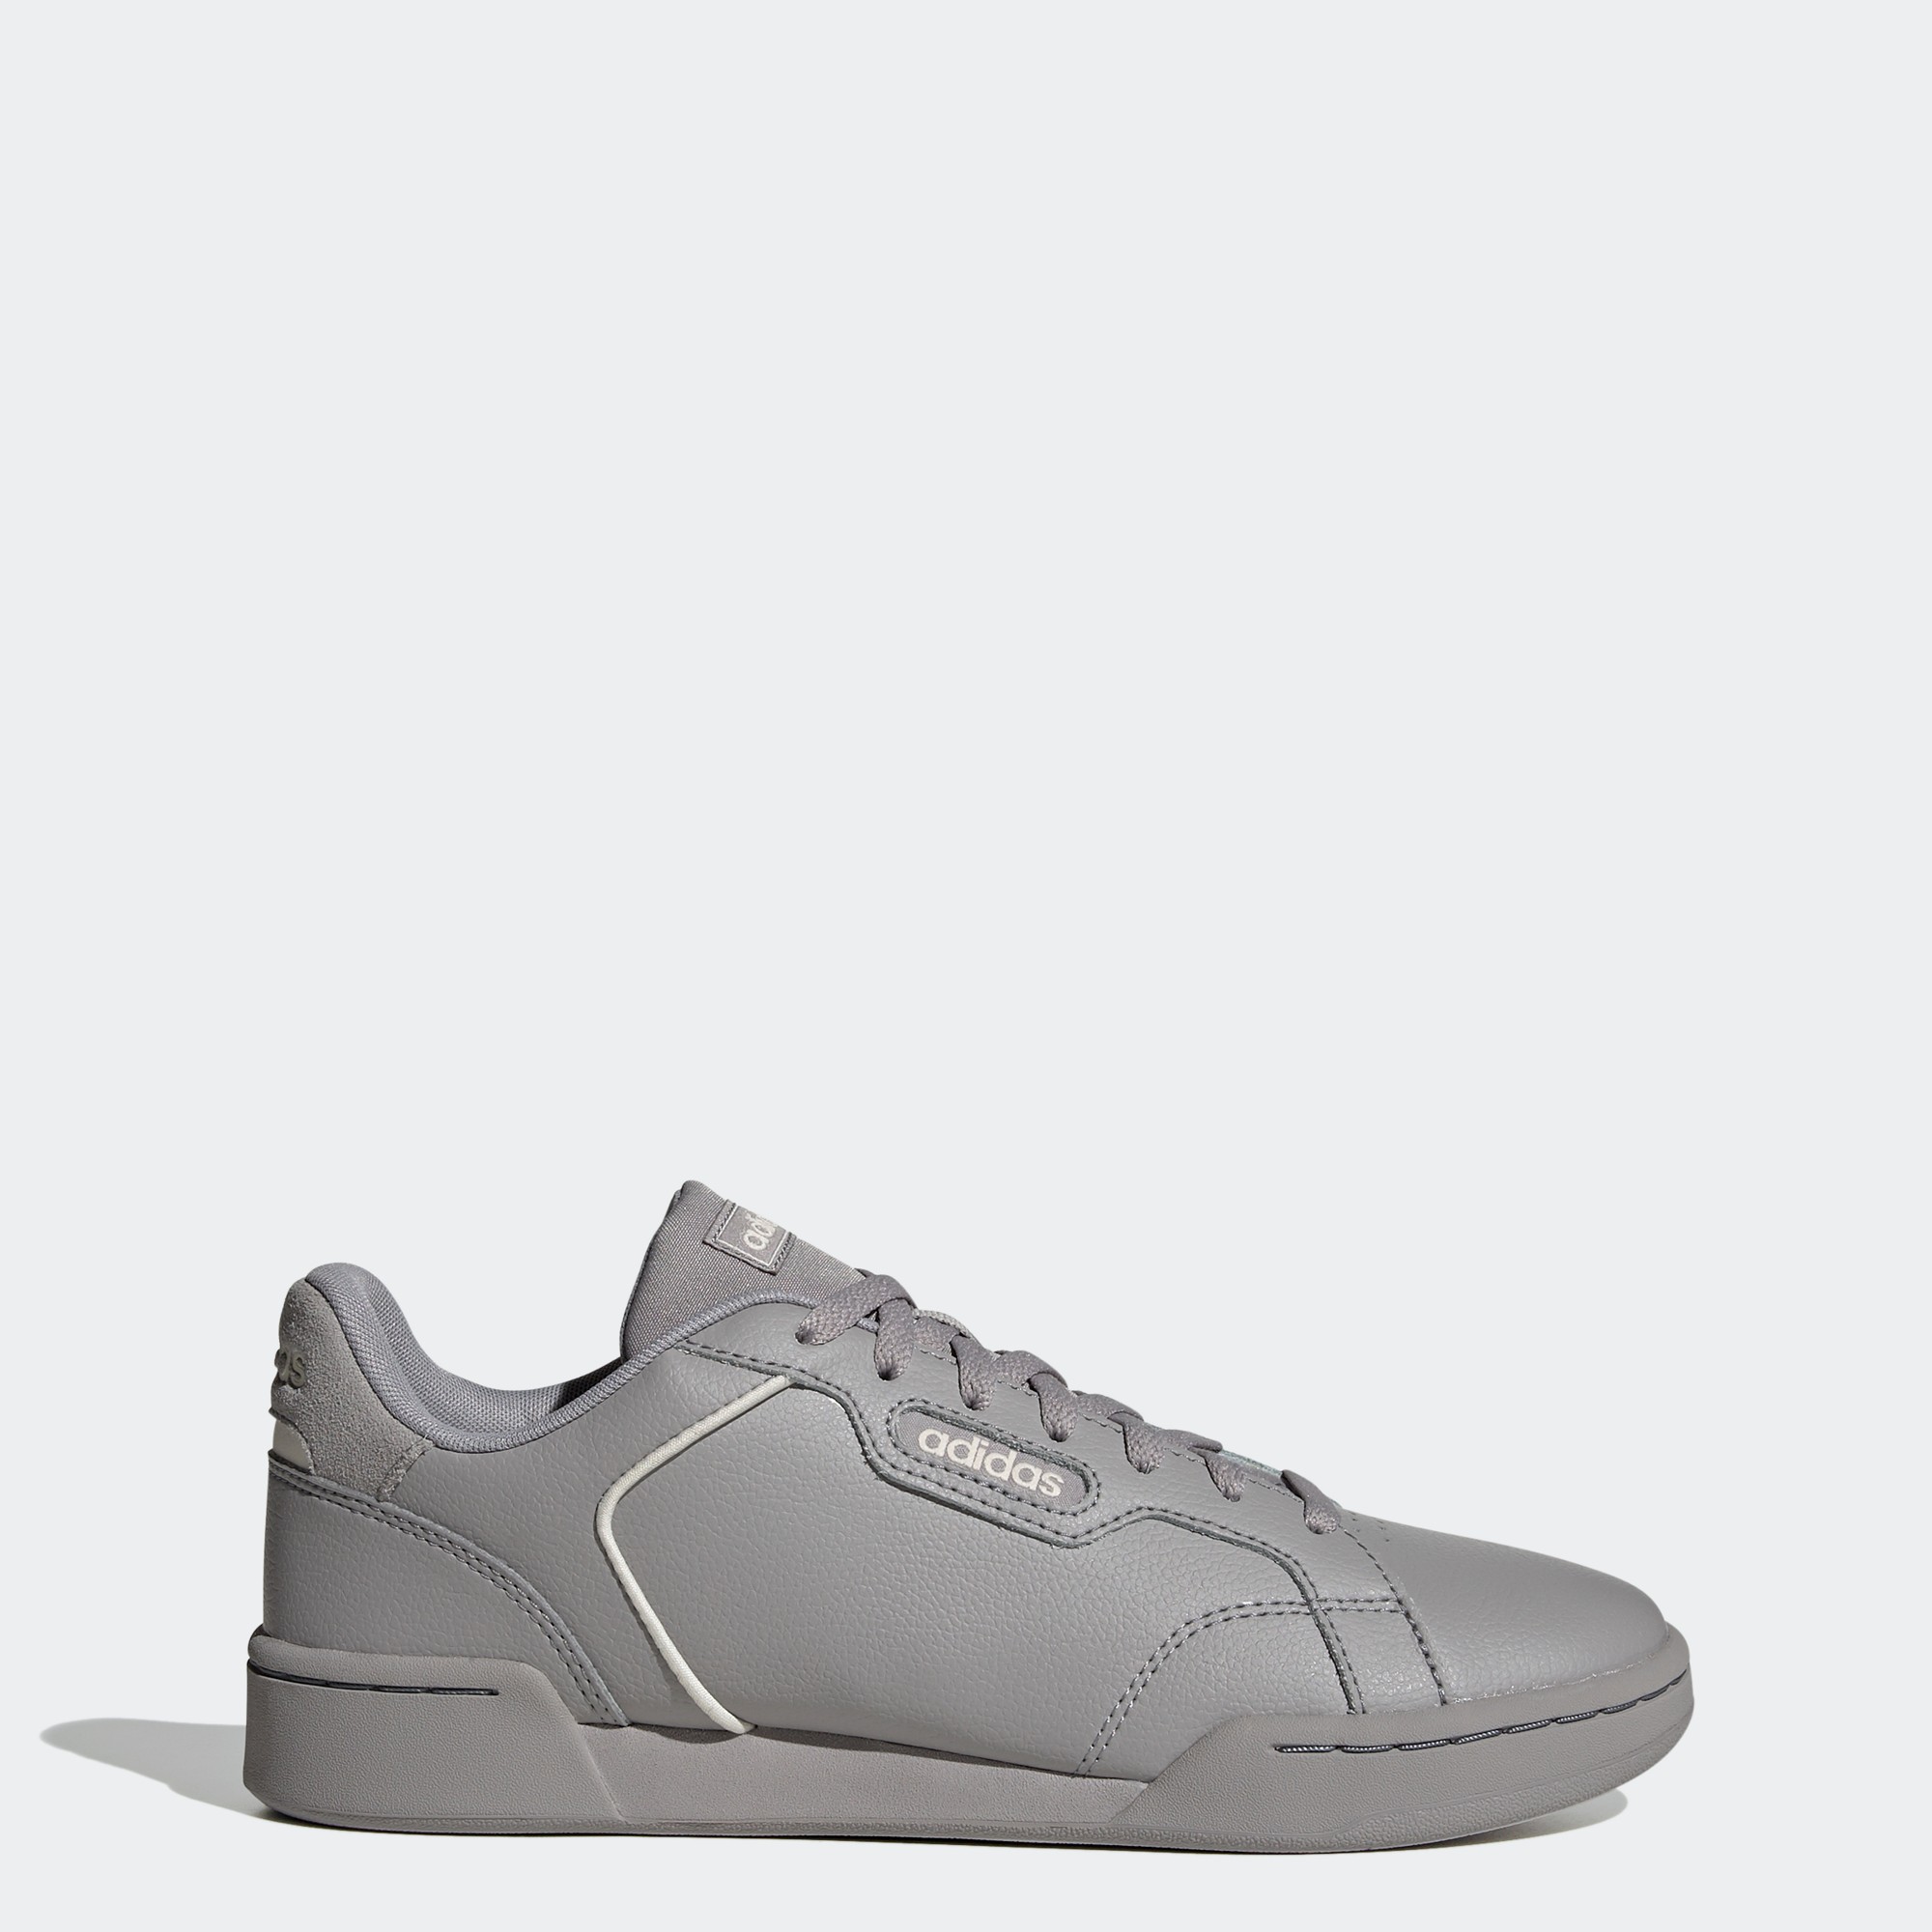 adidas รองเท้า Roguera ผู้ชาย Grey